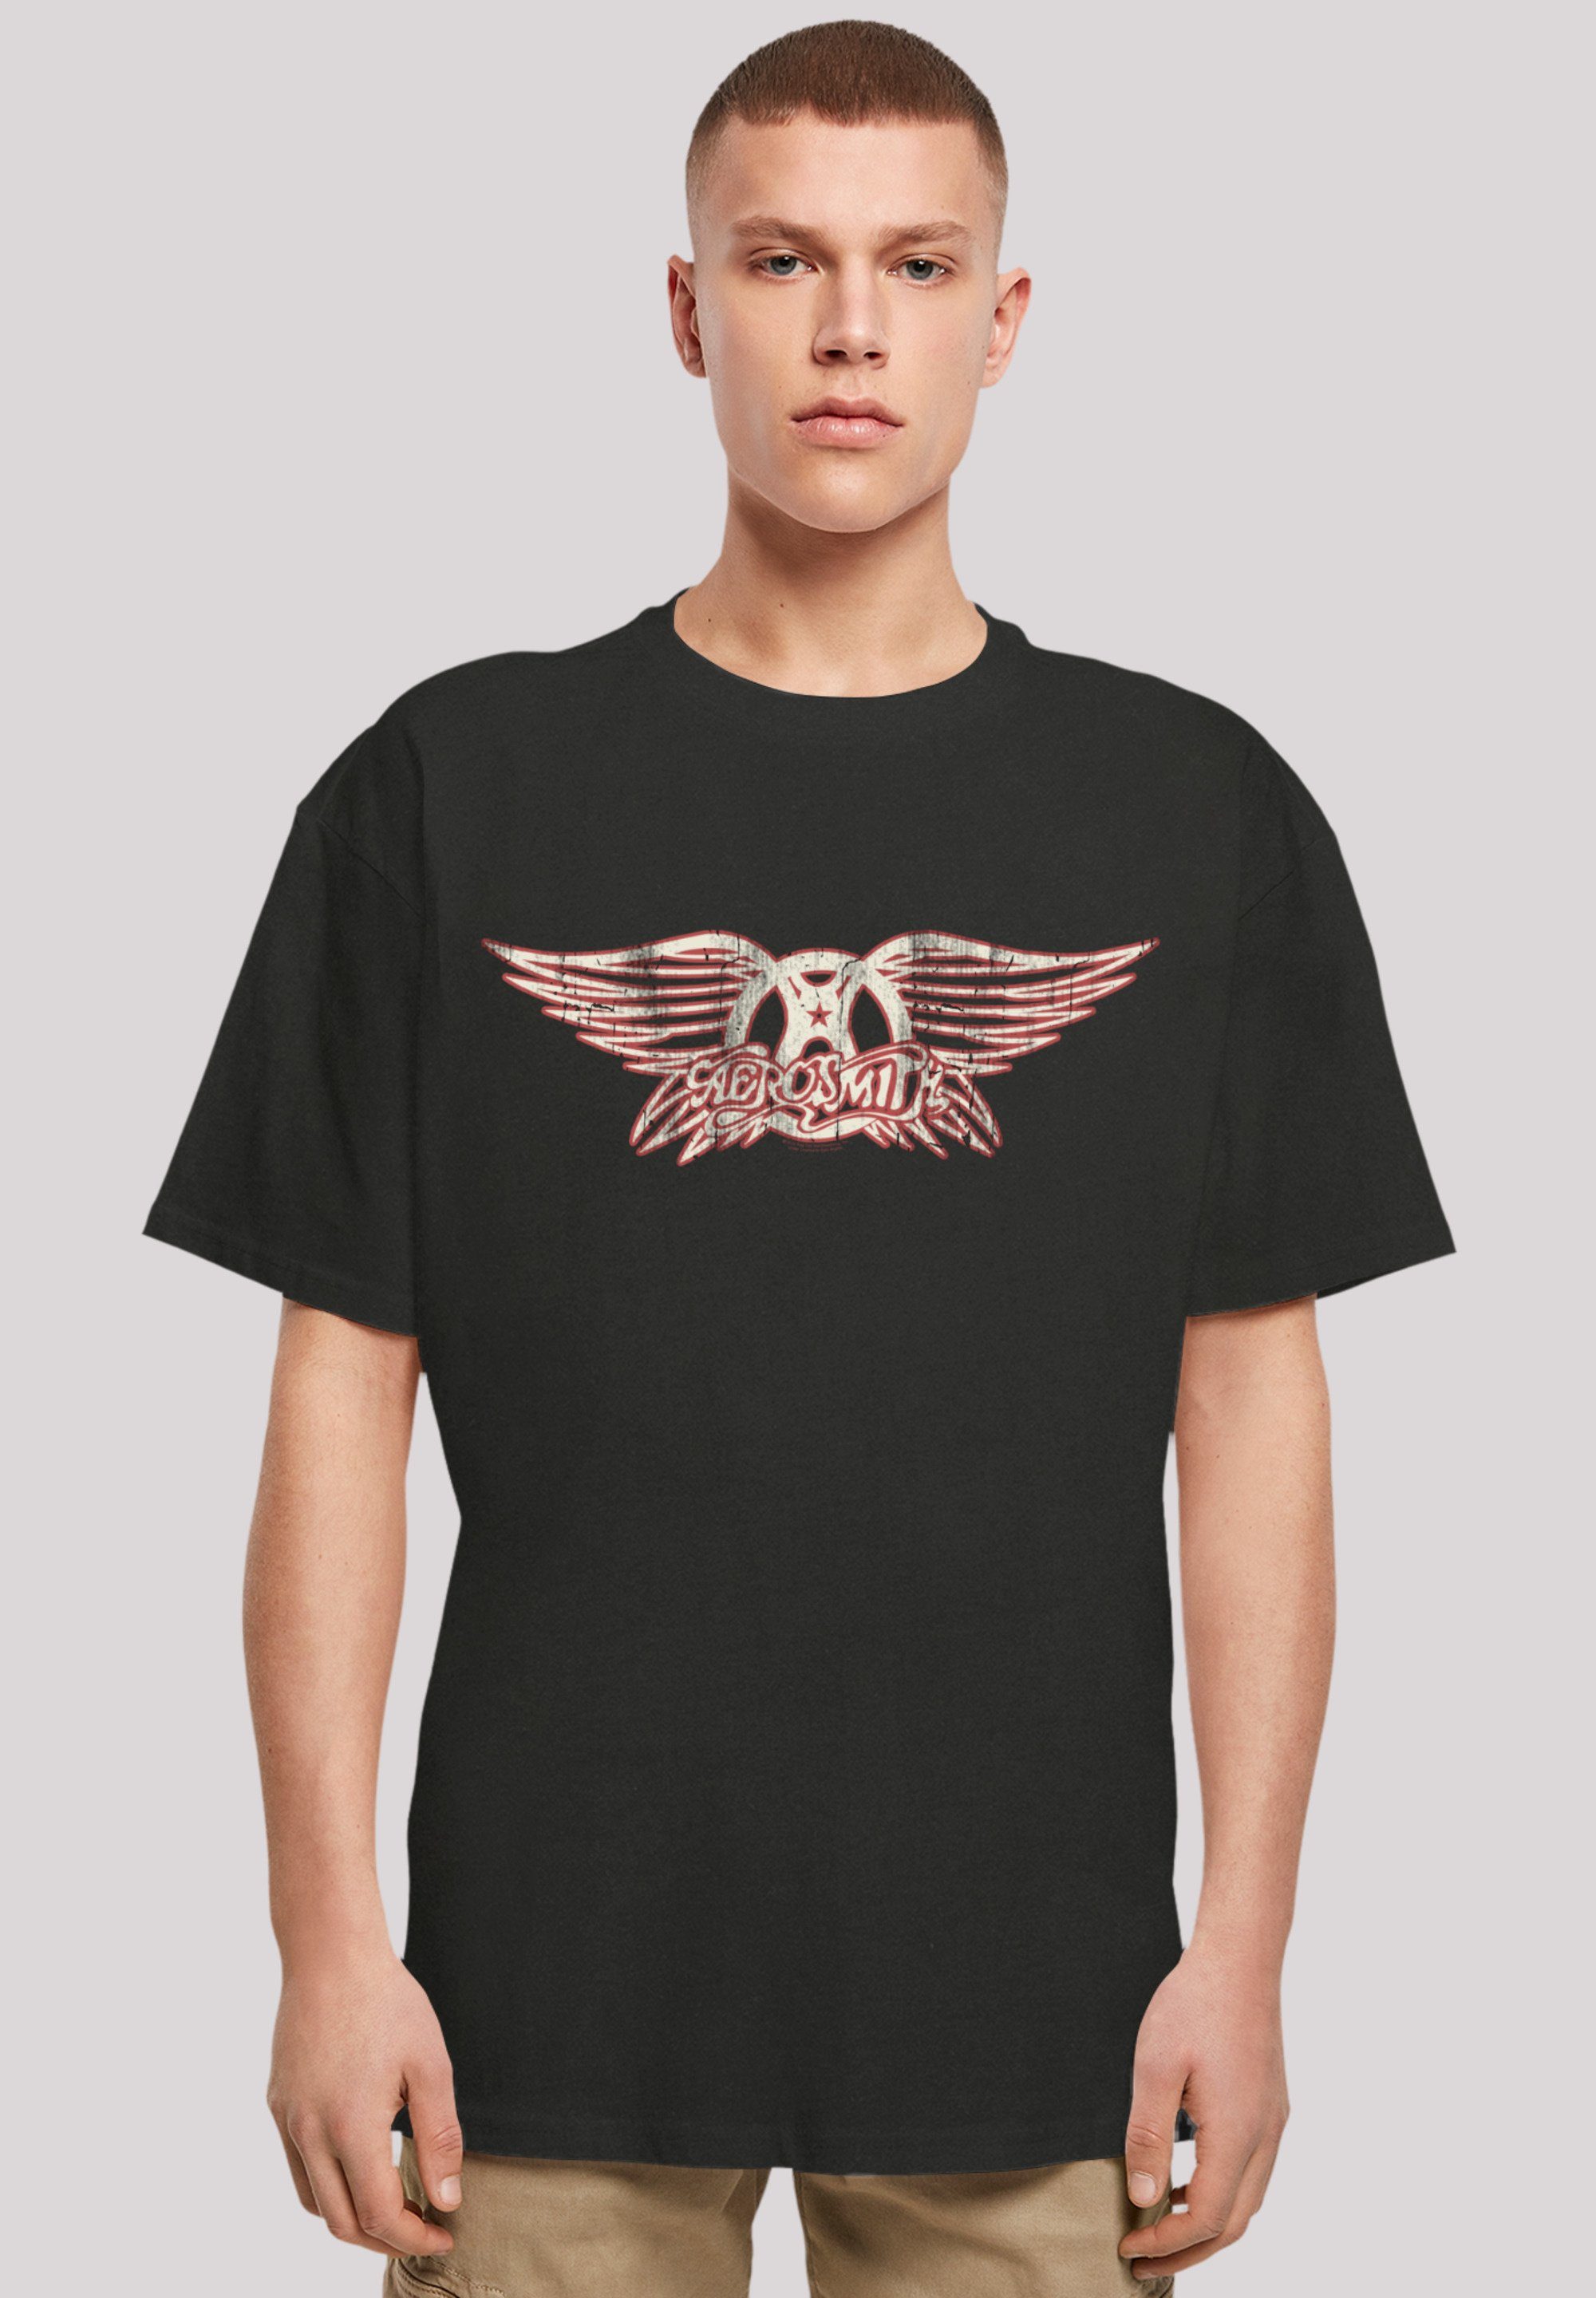 F4NT4STIC T-Shirt Premium Band Aerosmith Rock-Musik, Rock Qualität, schwarz Band Logo